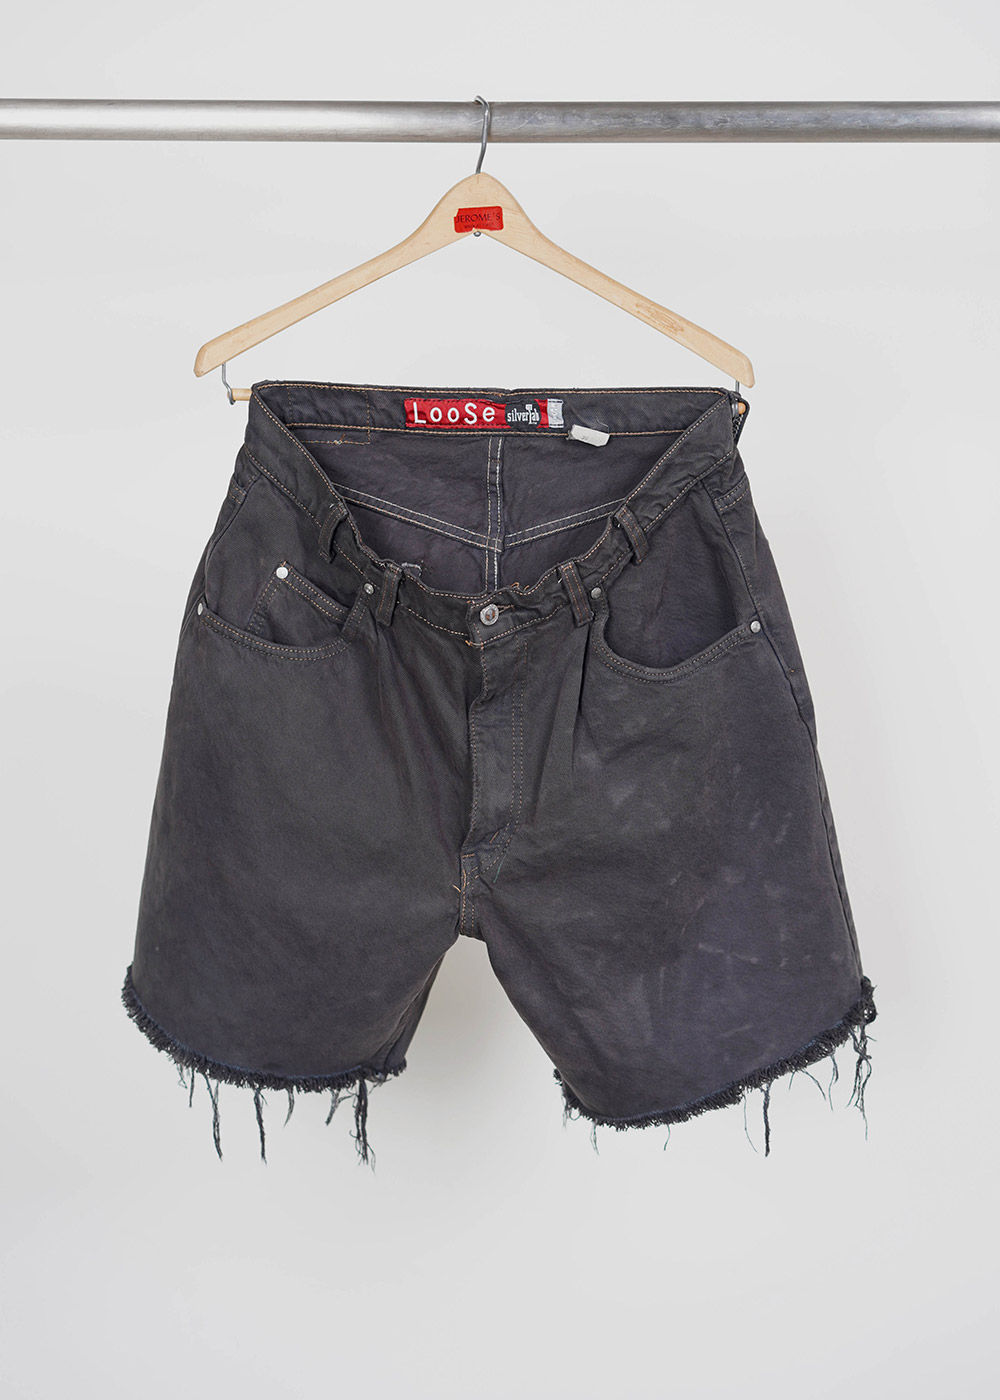 reproduction 124 / silverTab Shorts (Overdyed)